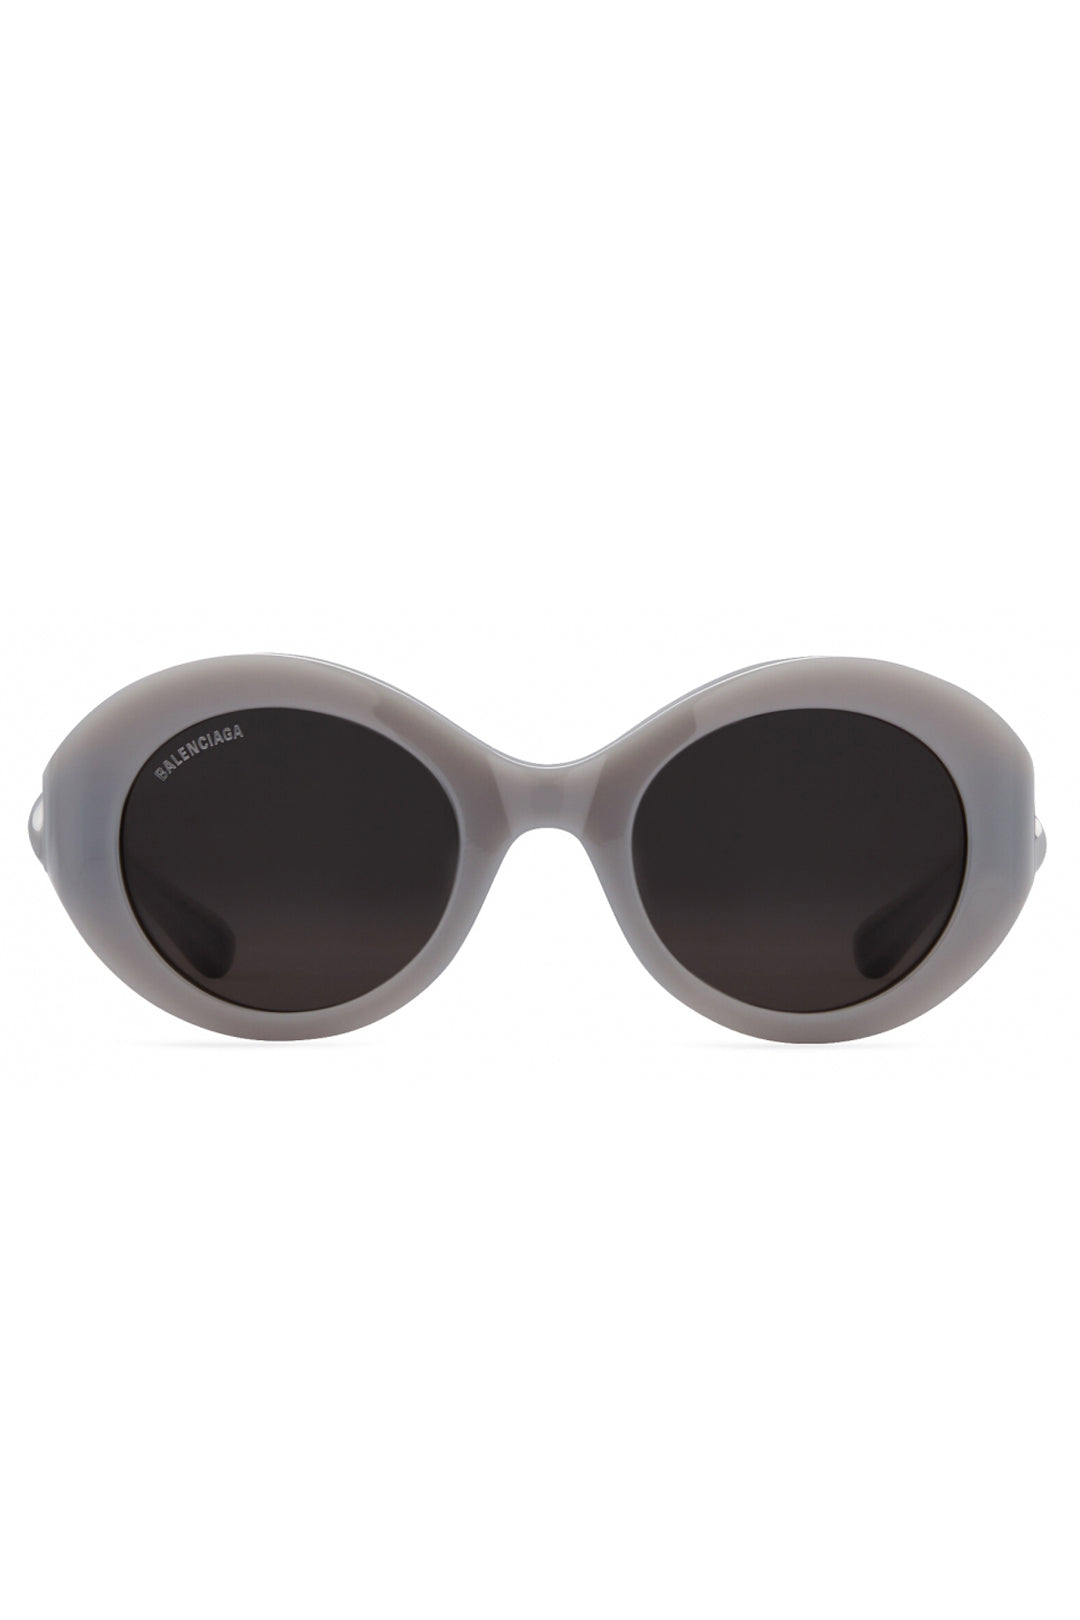 Balenciaga Eyewear Swift Round Sunglasses  Designer Sunglasses  RADPRESENT